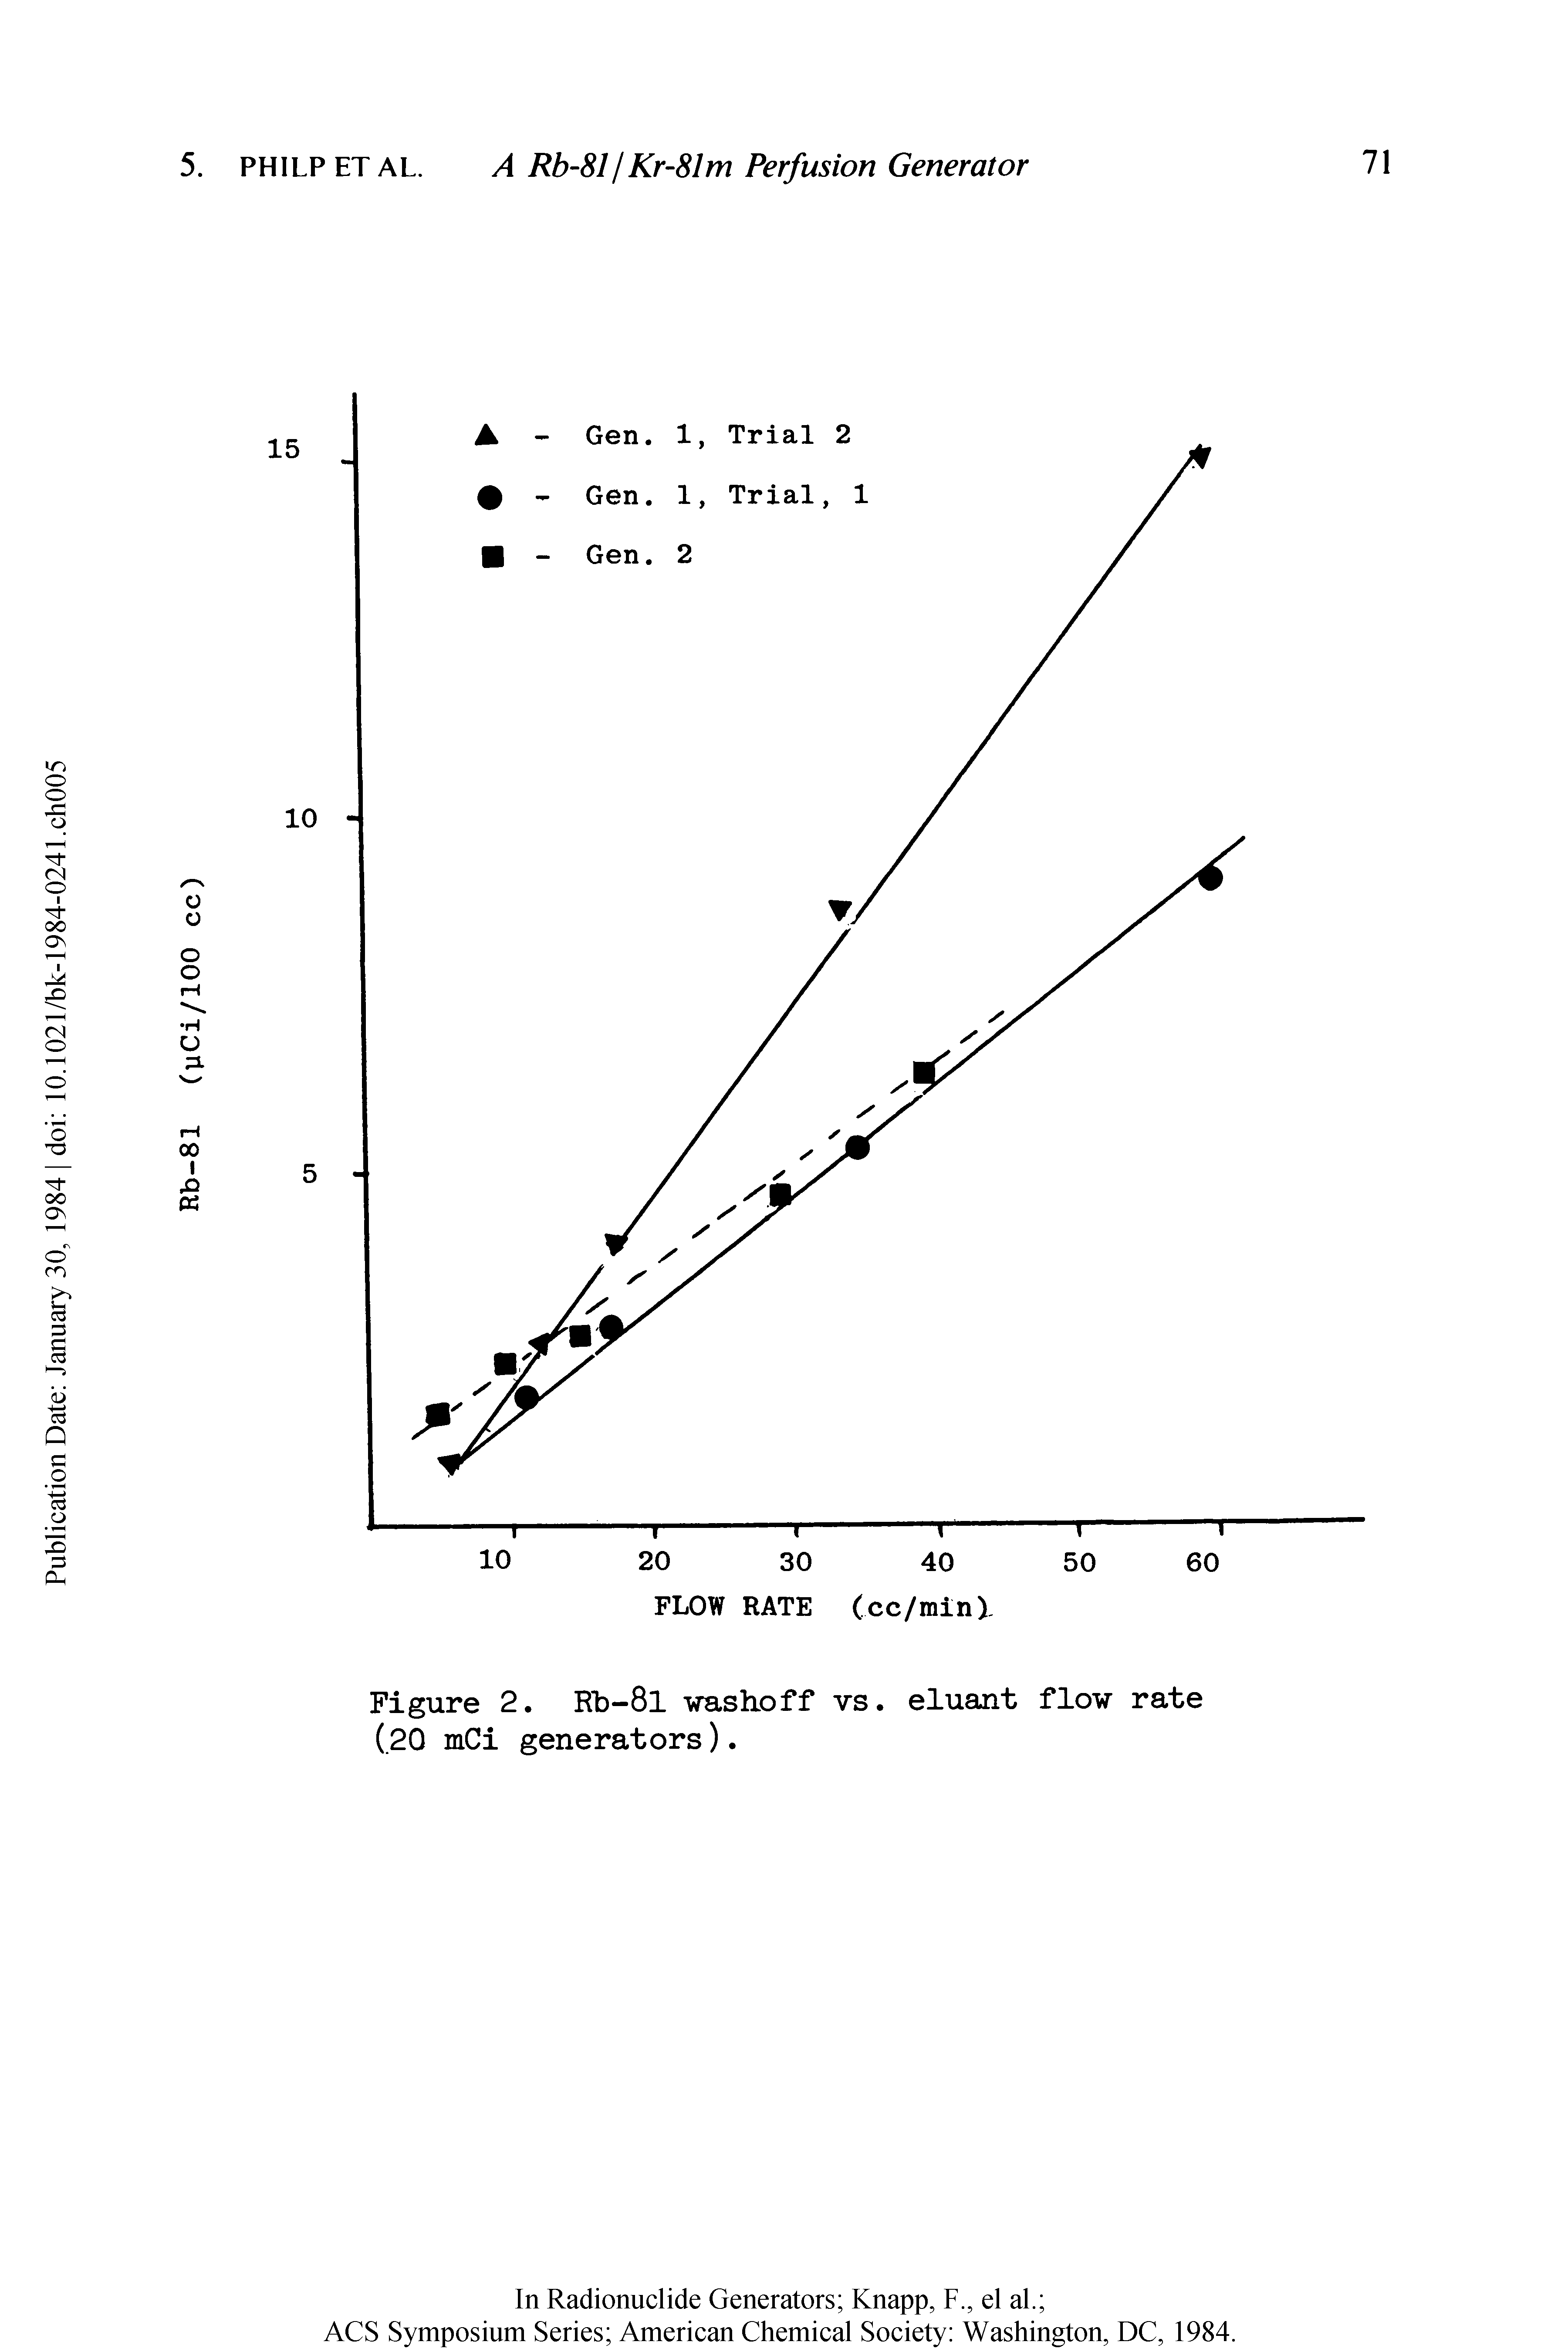 Figure 2. Kb-8l washoff vs. eluant flow rate (.20 mCi generators).